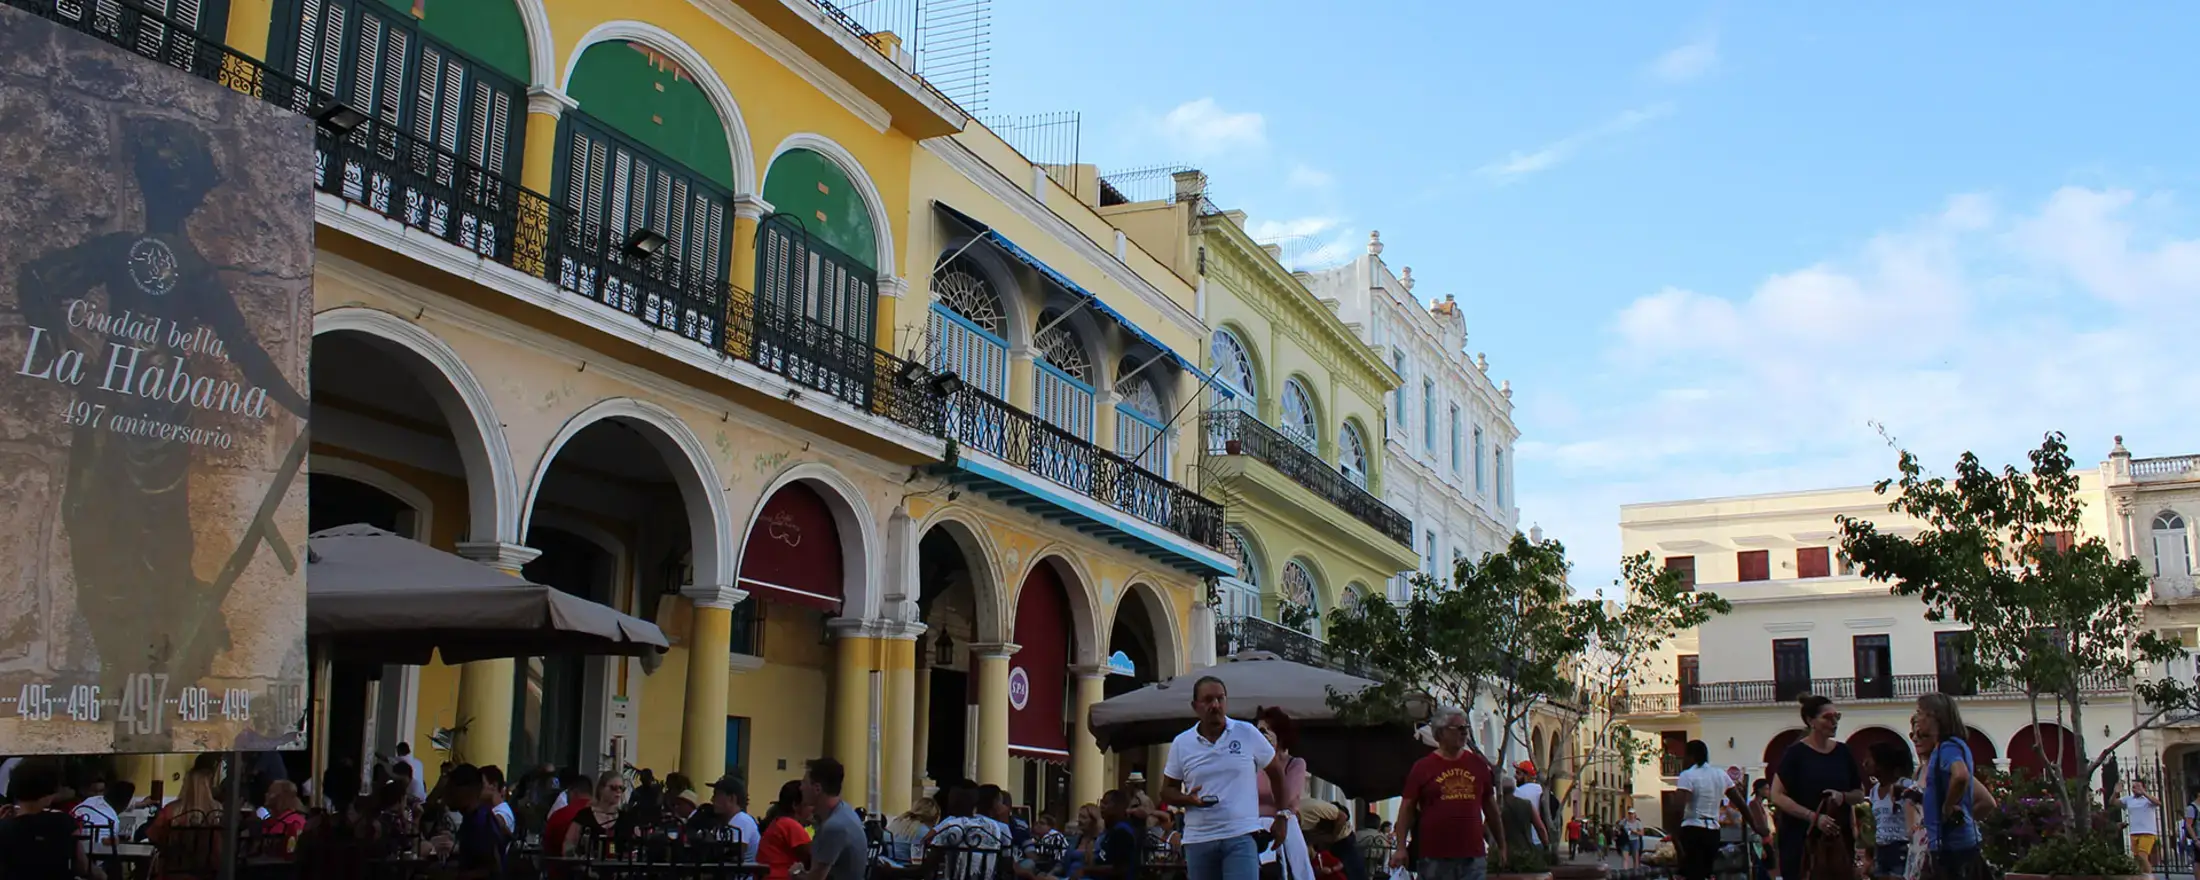 The city of La Havana